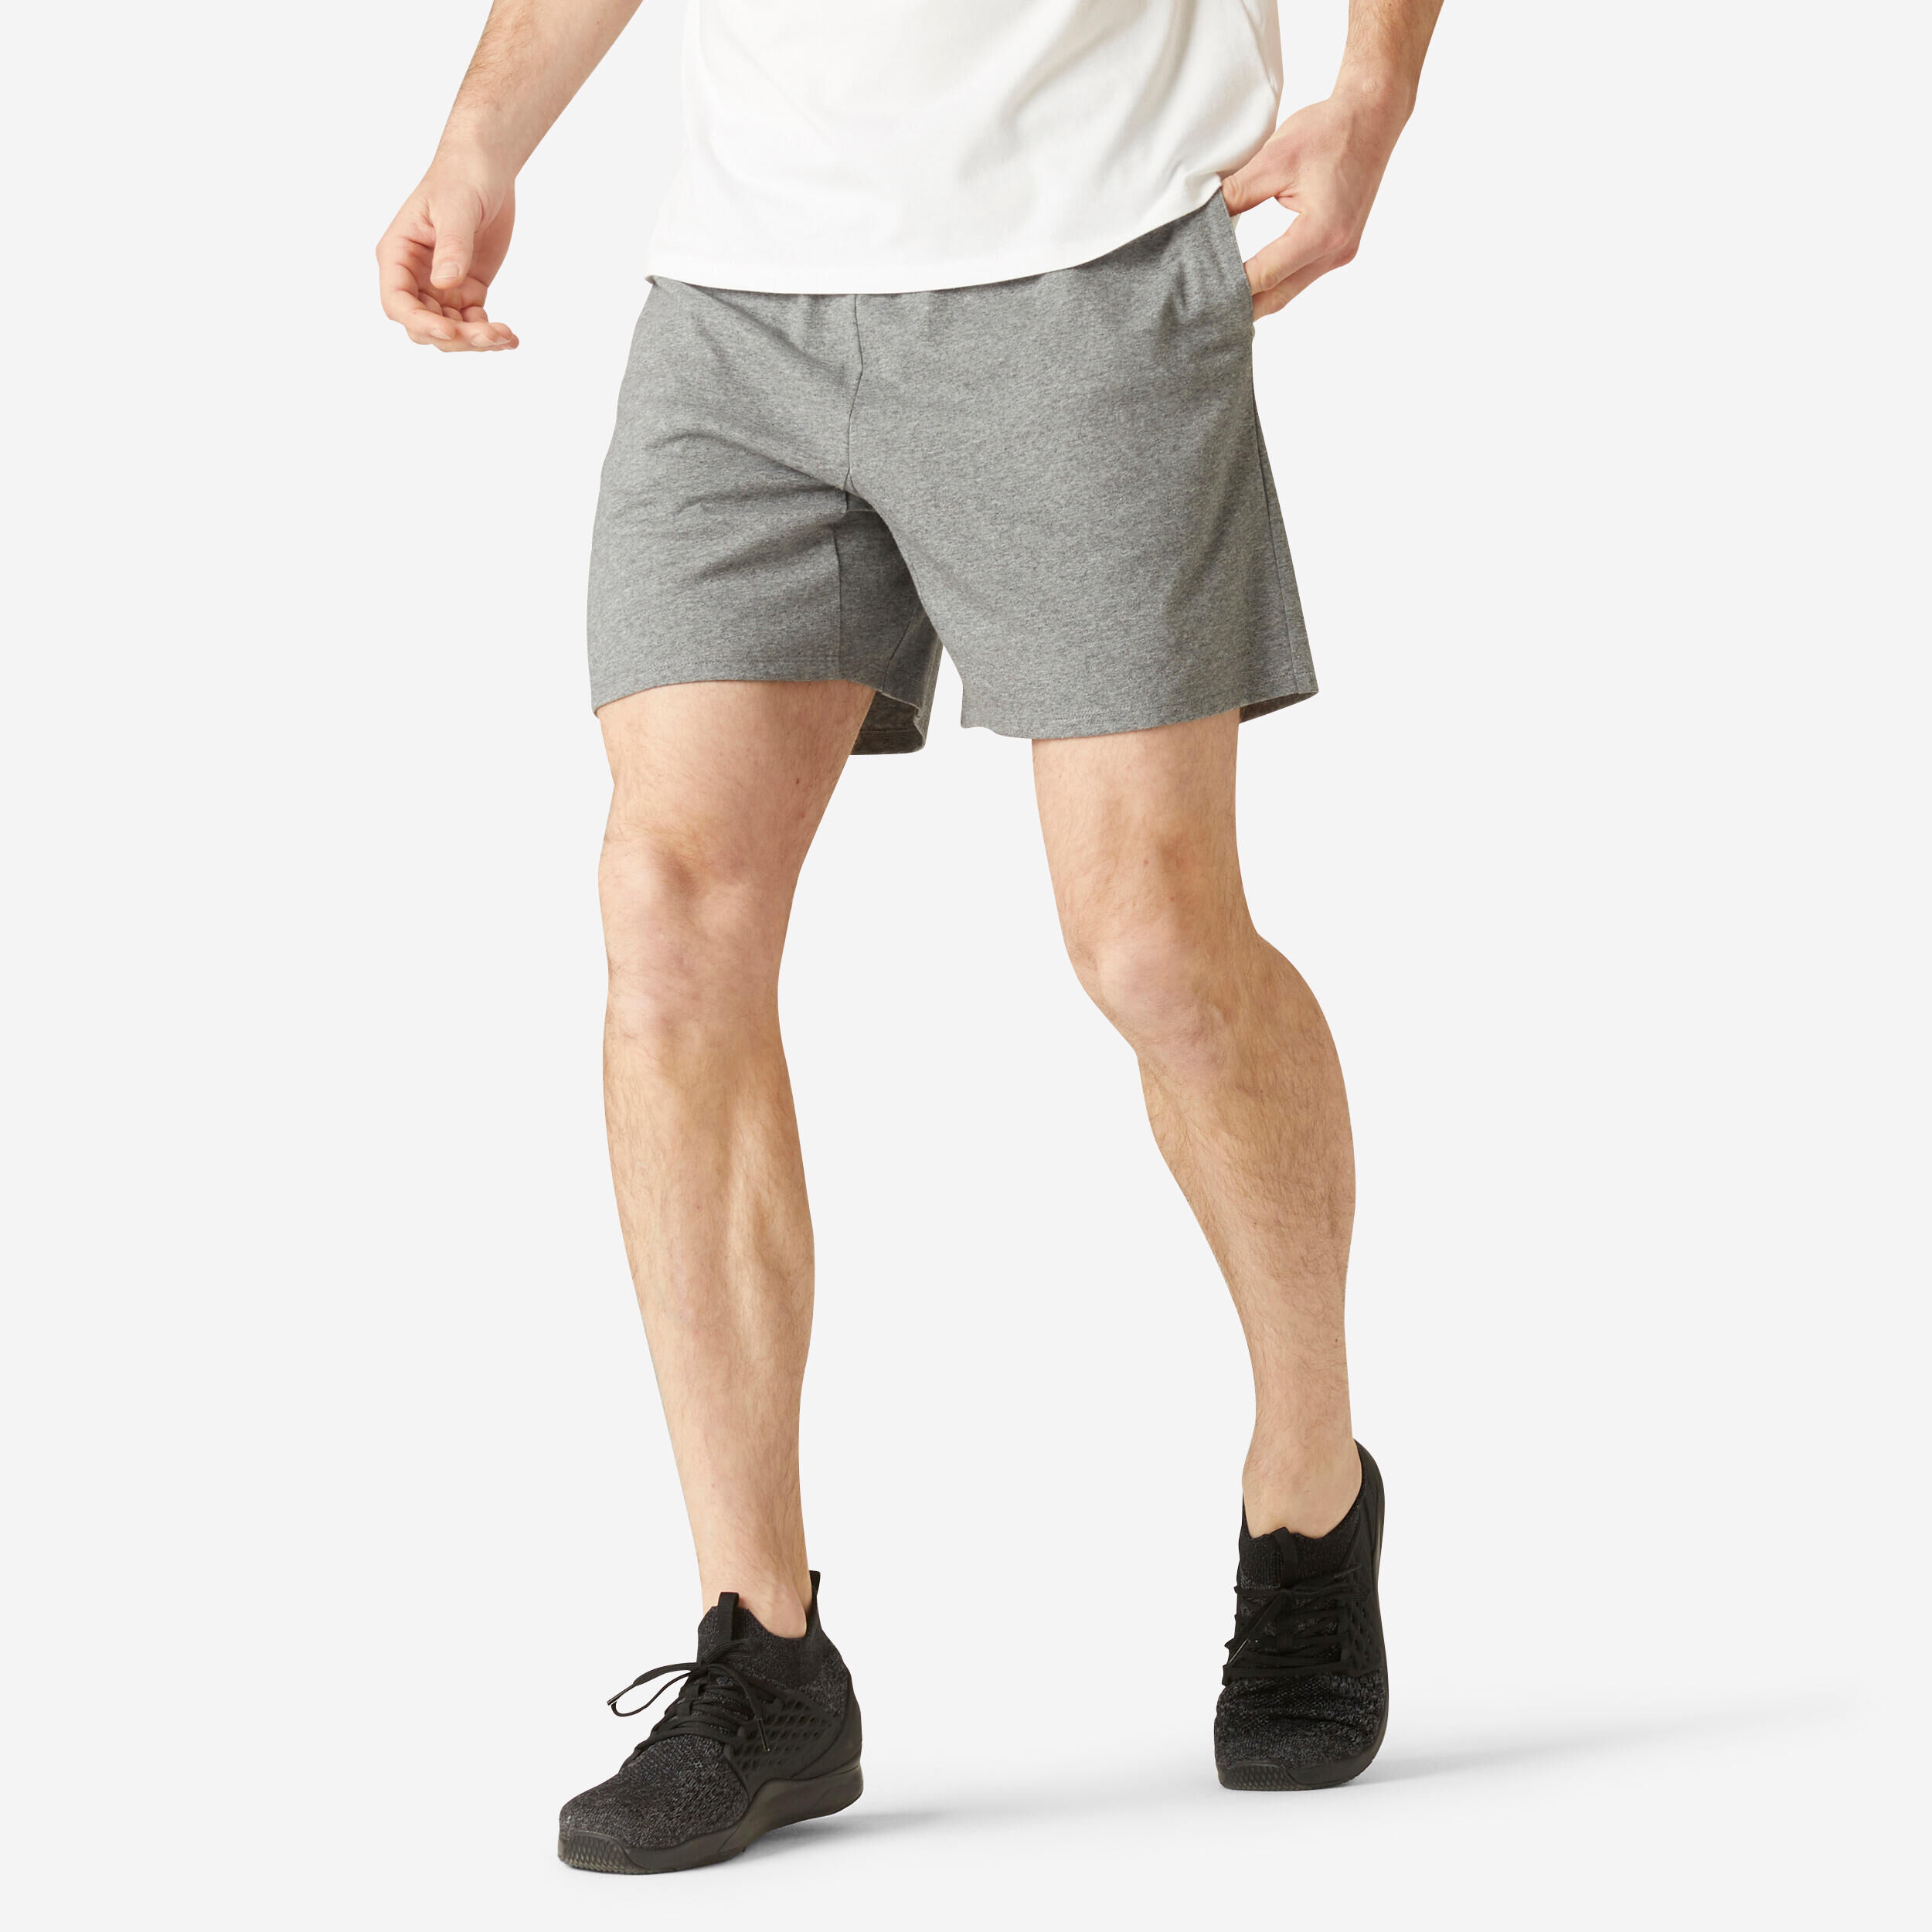 Men's Gym Shorts, Workout Shorts